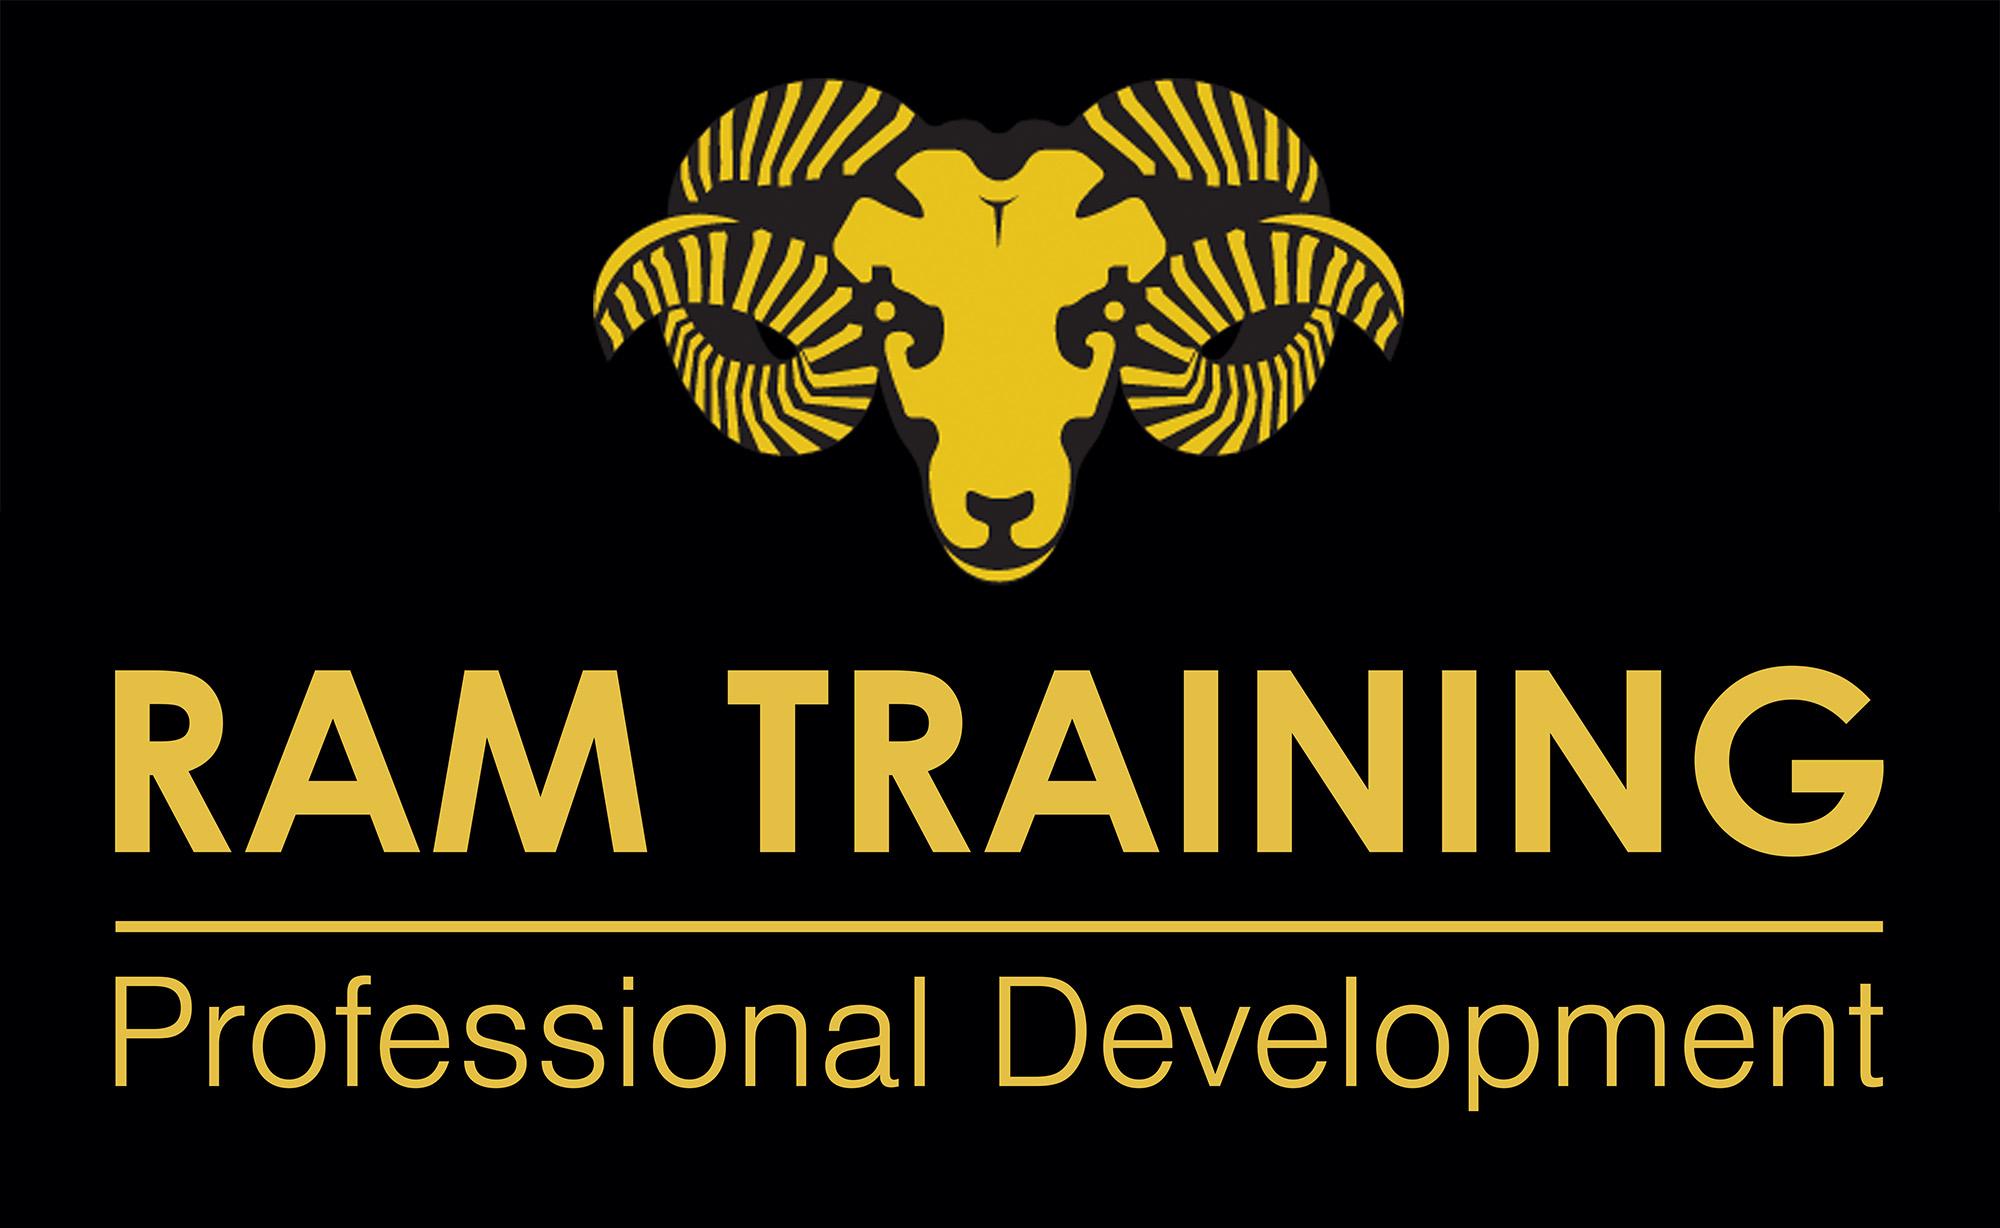 Ram Training Professional Development